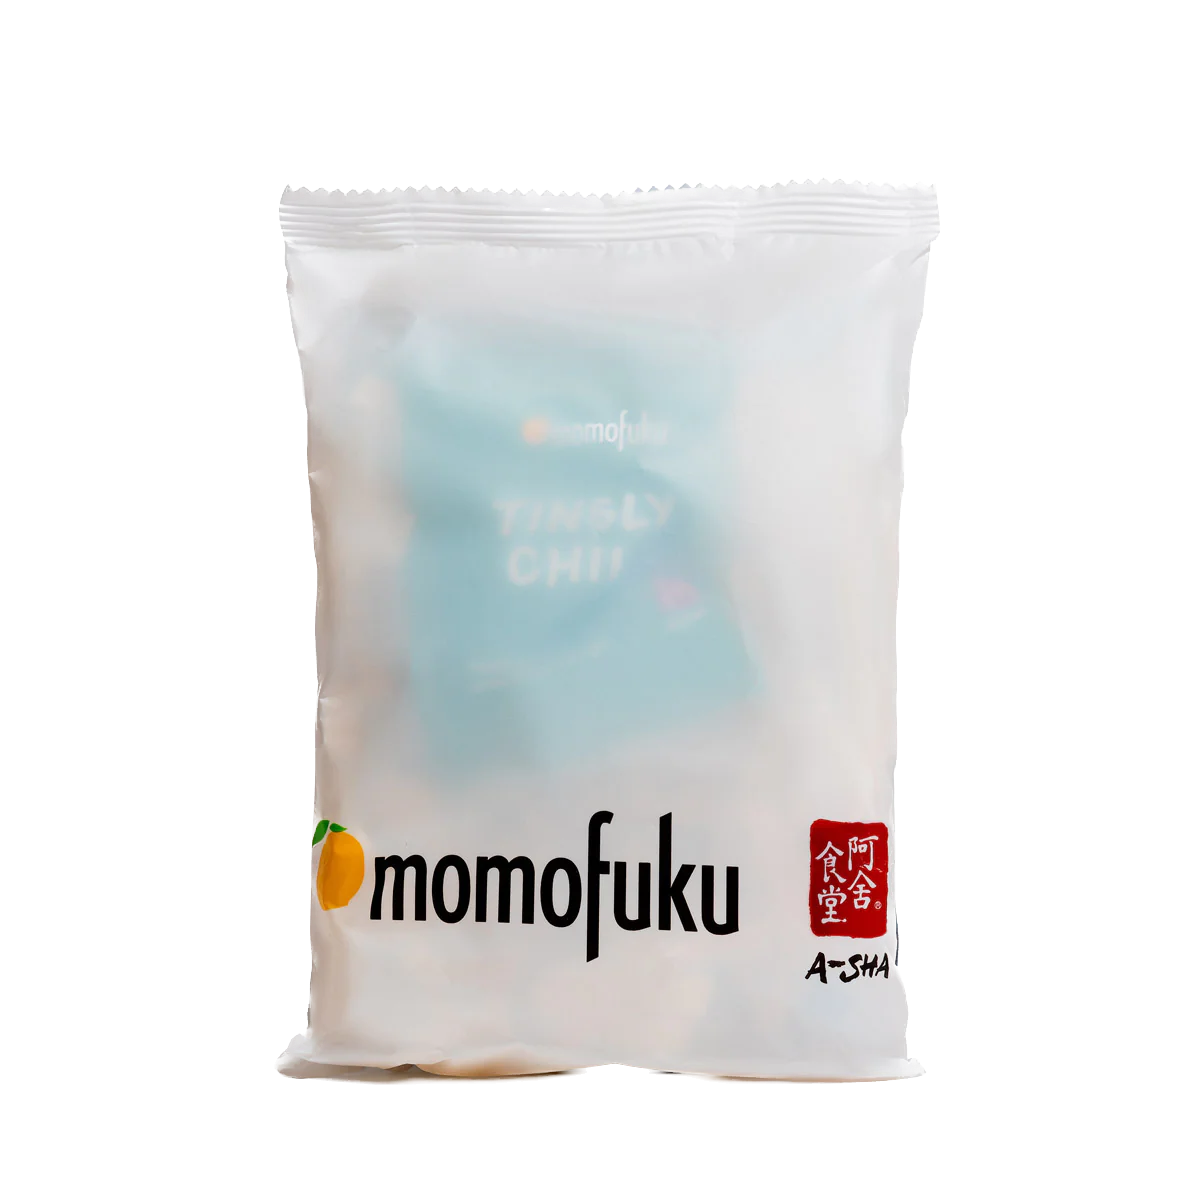 Momofuku | Noodles: Tingly Chili (95g single serving)